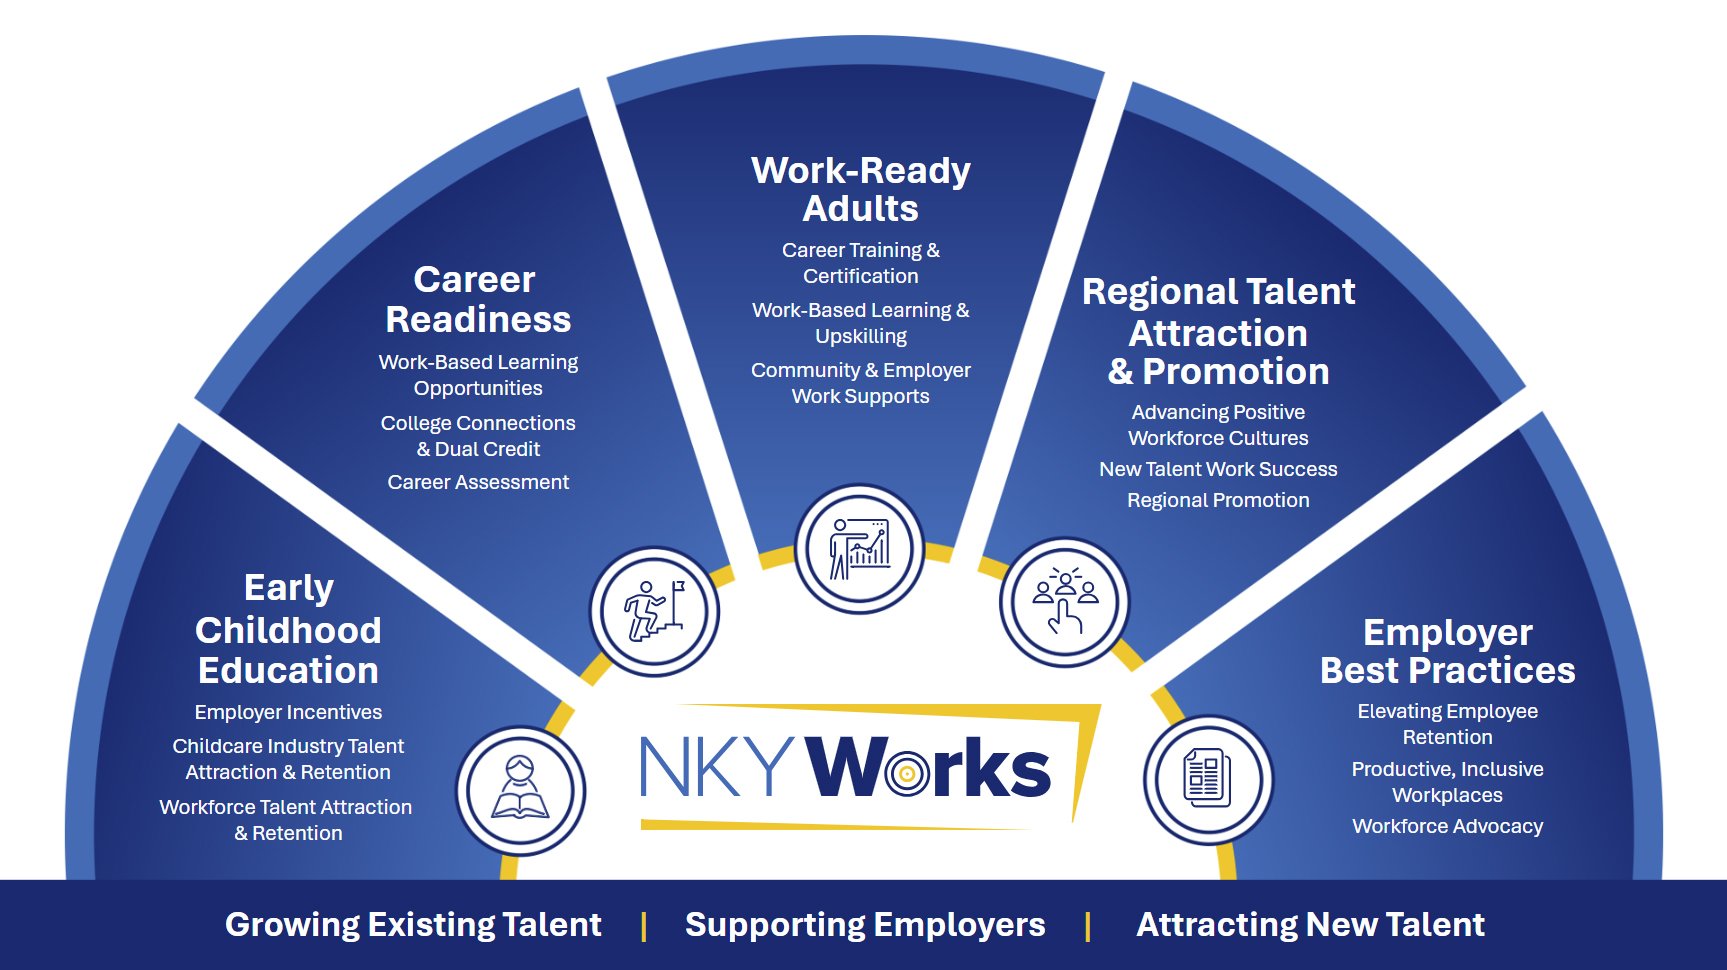 NKY Works focus areas